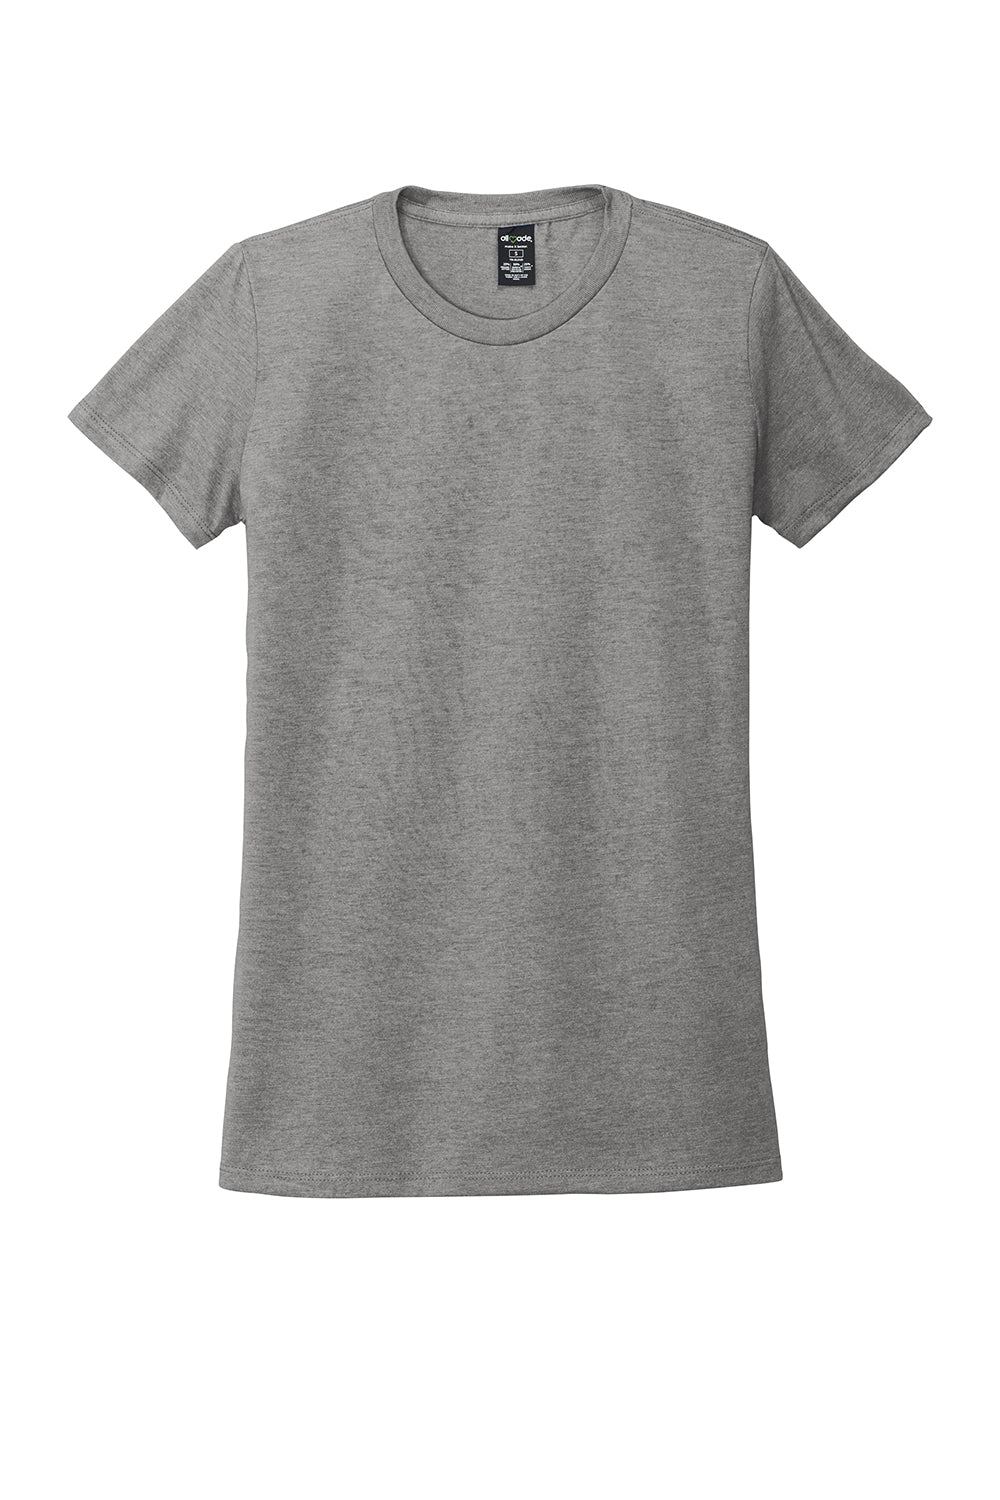 Allmade AL2008 Womens Short Sleeve Crewneck T-Shirt Aluminum Grey Flat Front